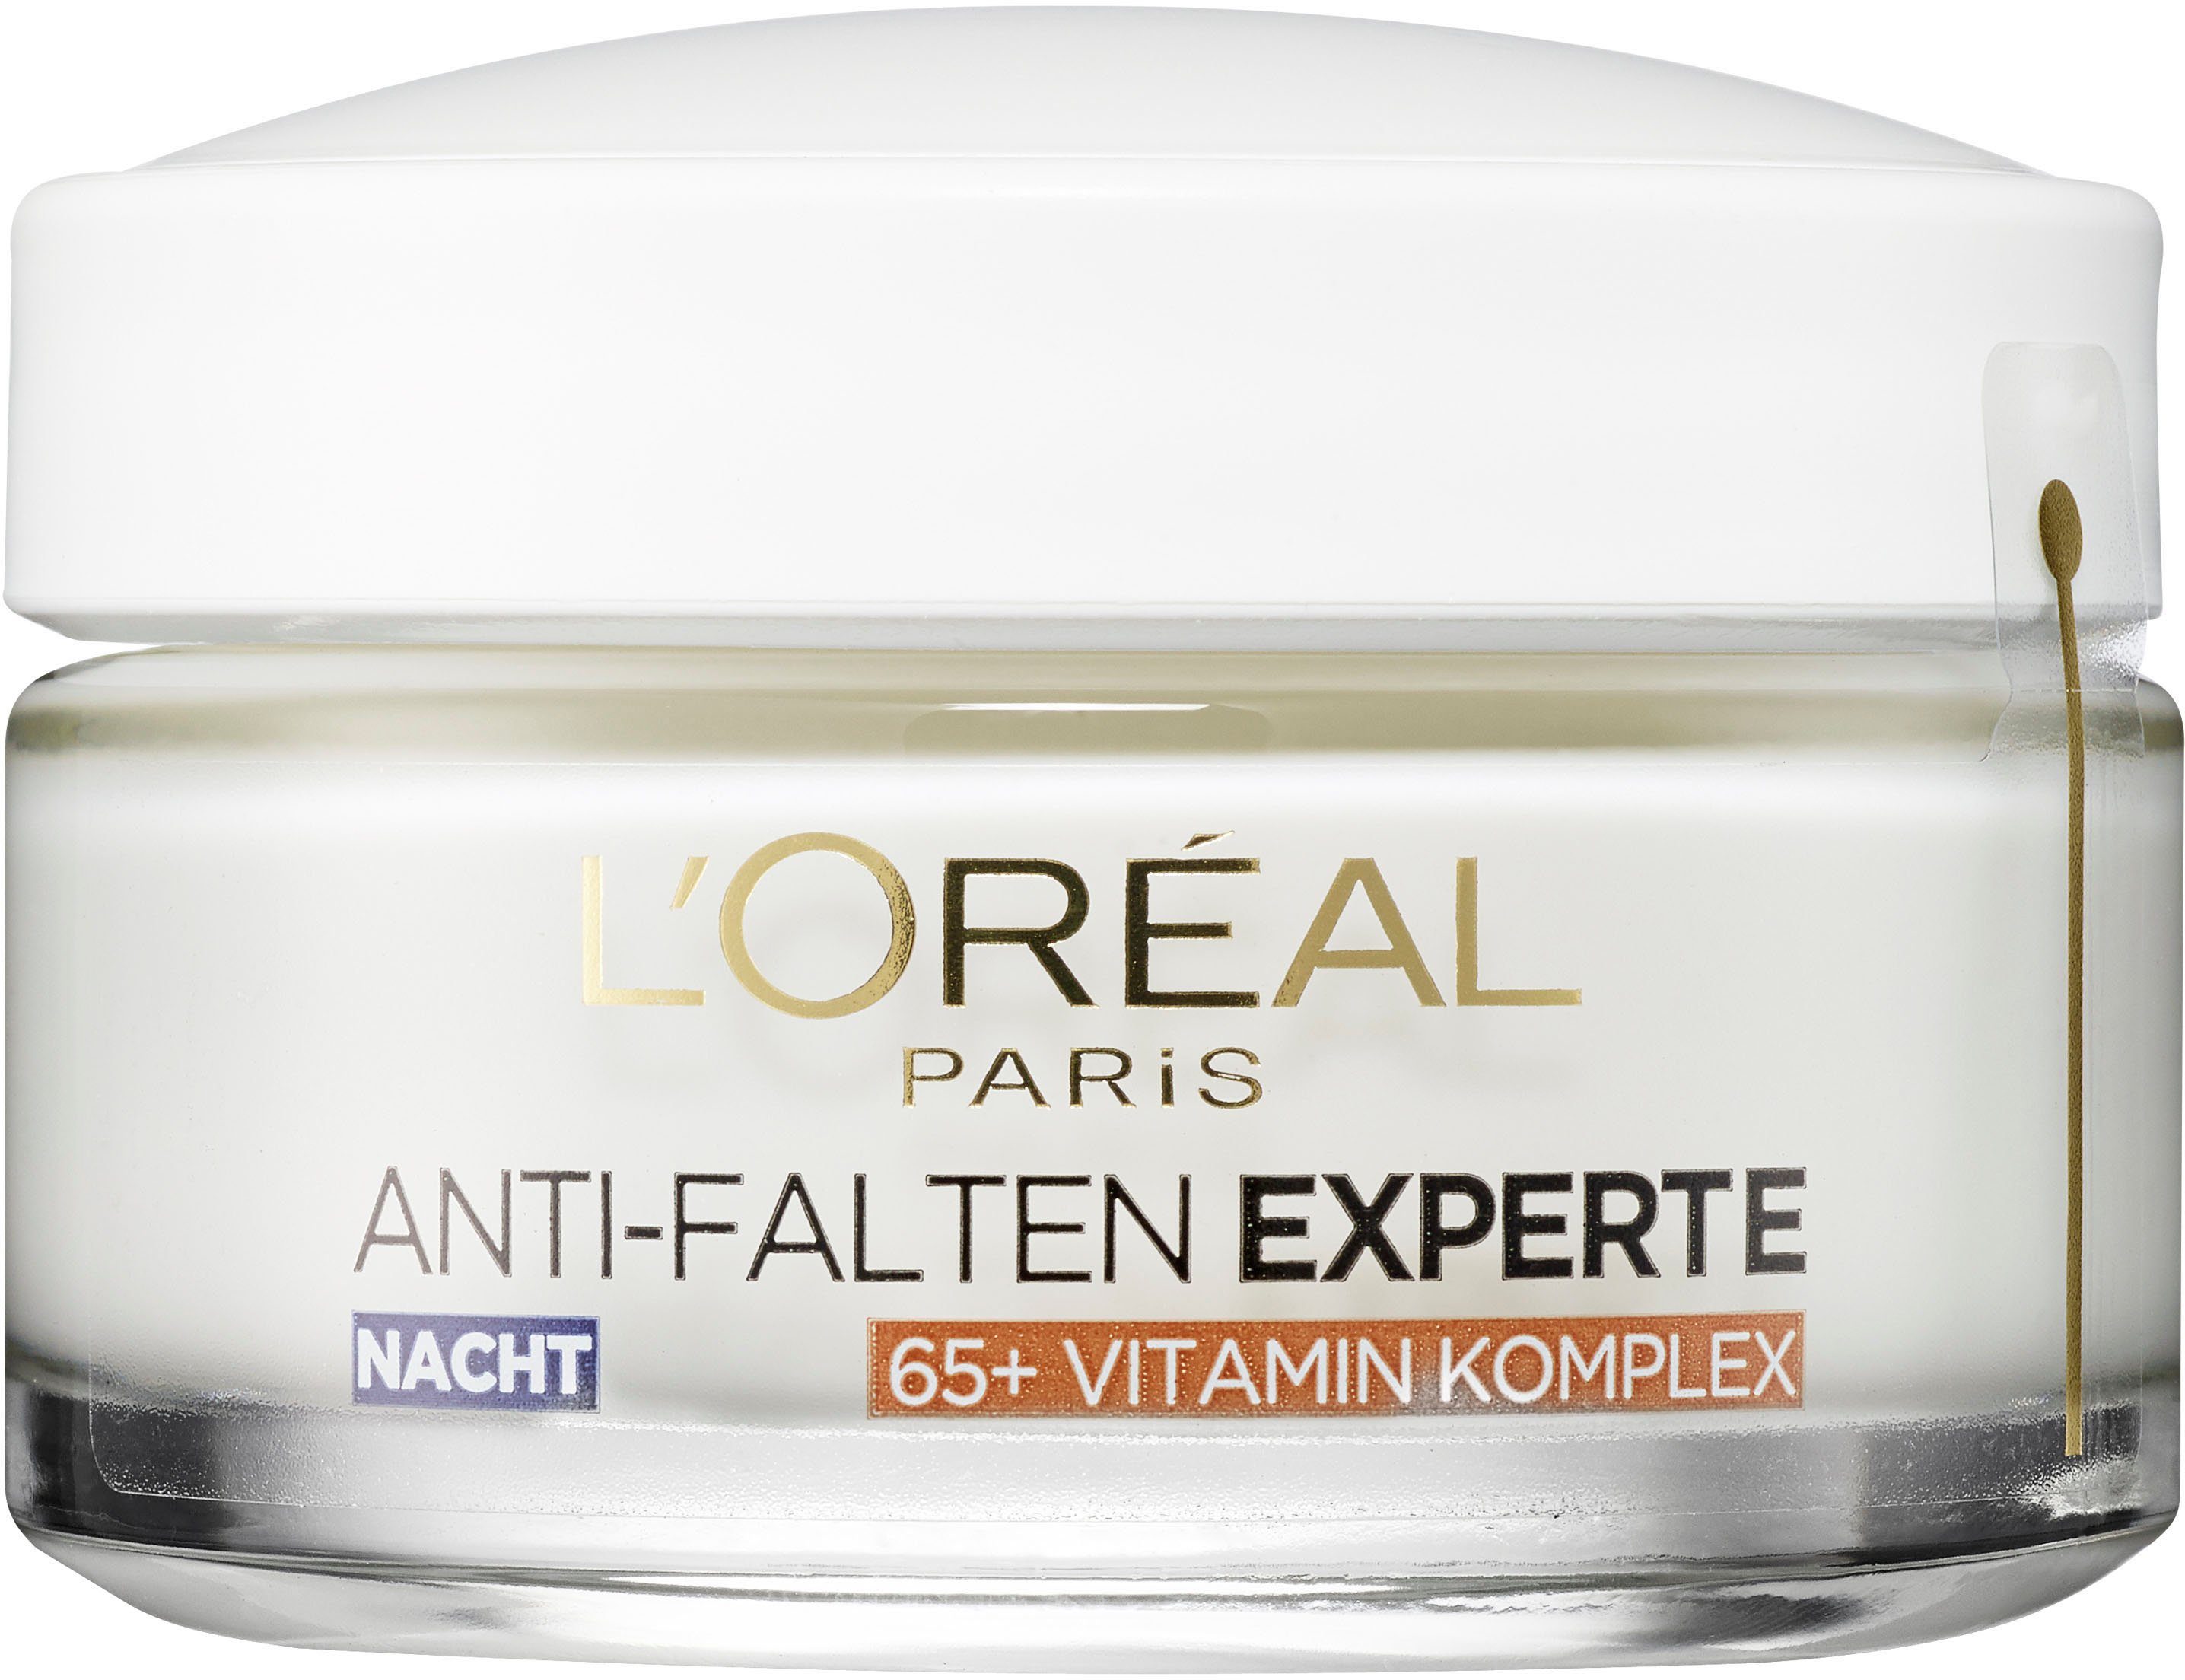 für Anti-Aging-Creme Experte 65+ L'ORÉAL Nacht Haut Feuchtigkeitspflege Anti-Falten PARIS